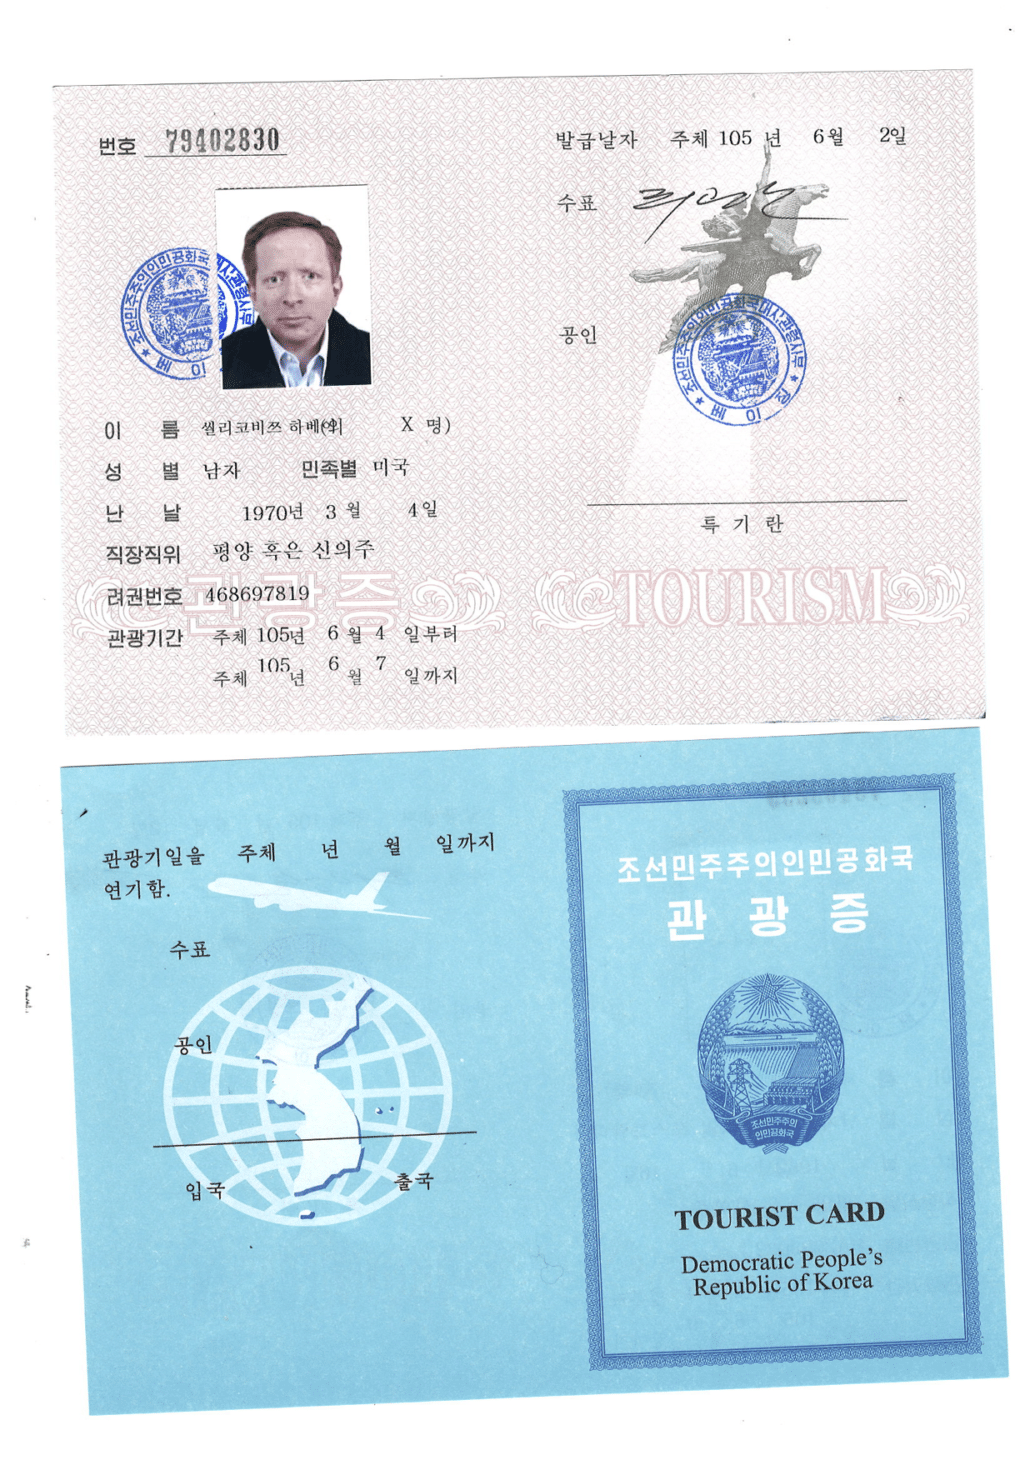 My DPRK entry visa